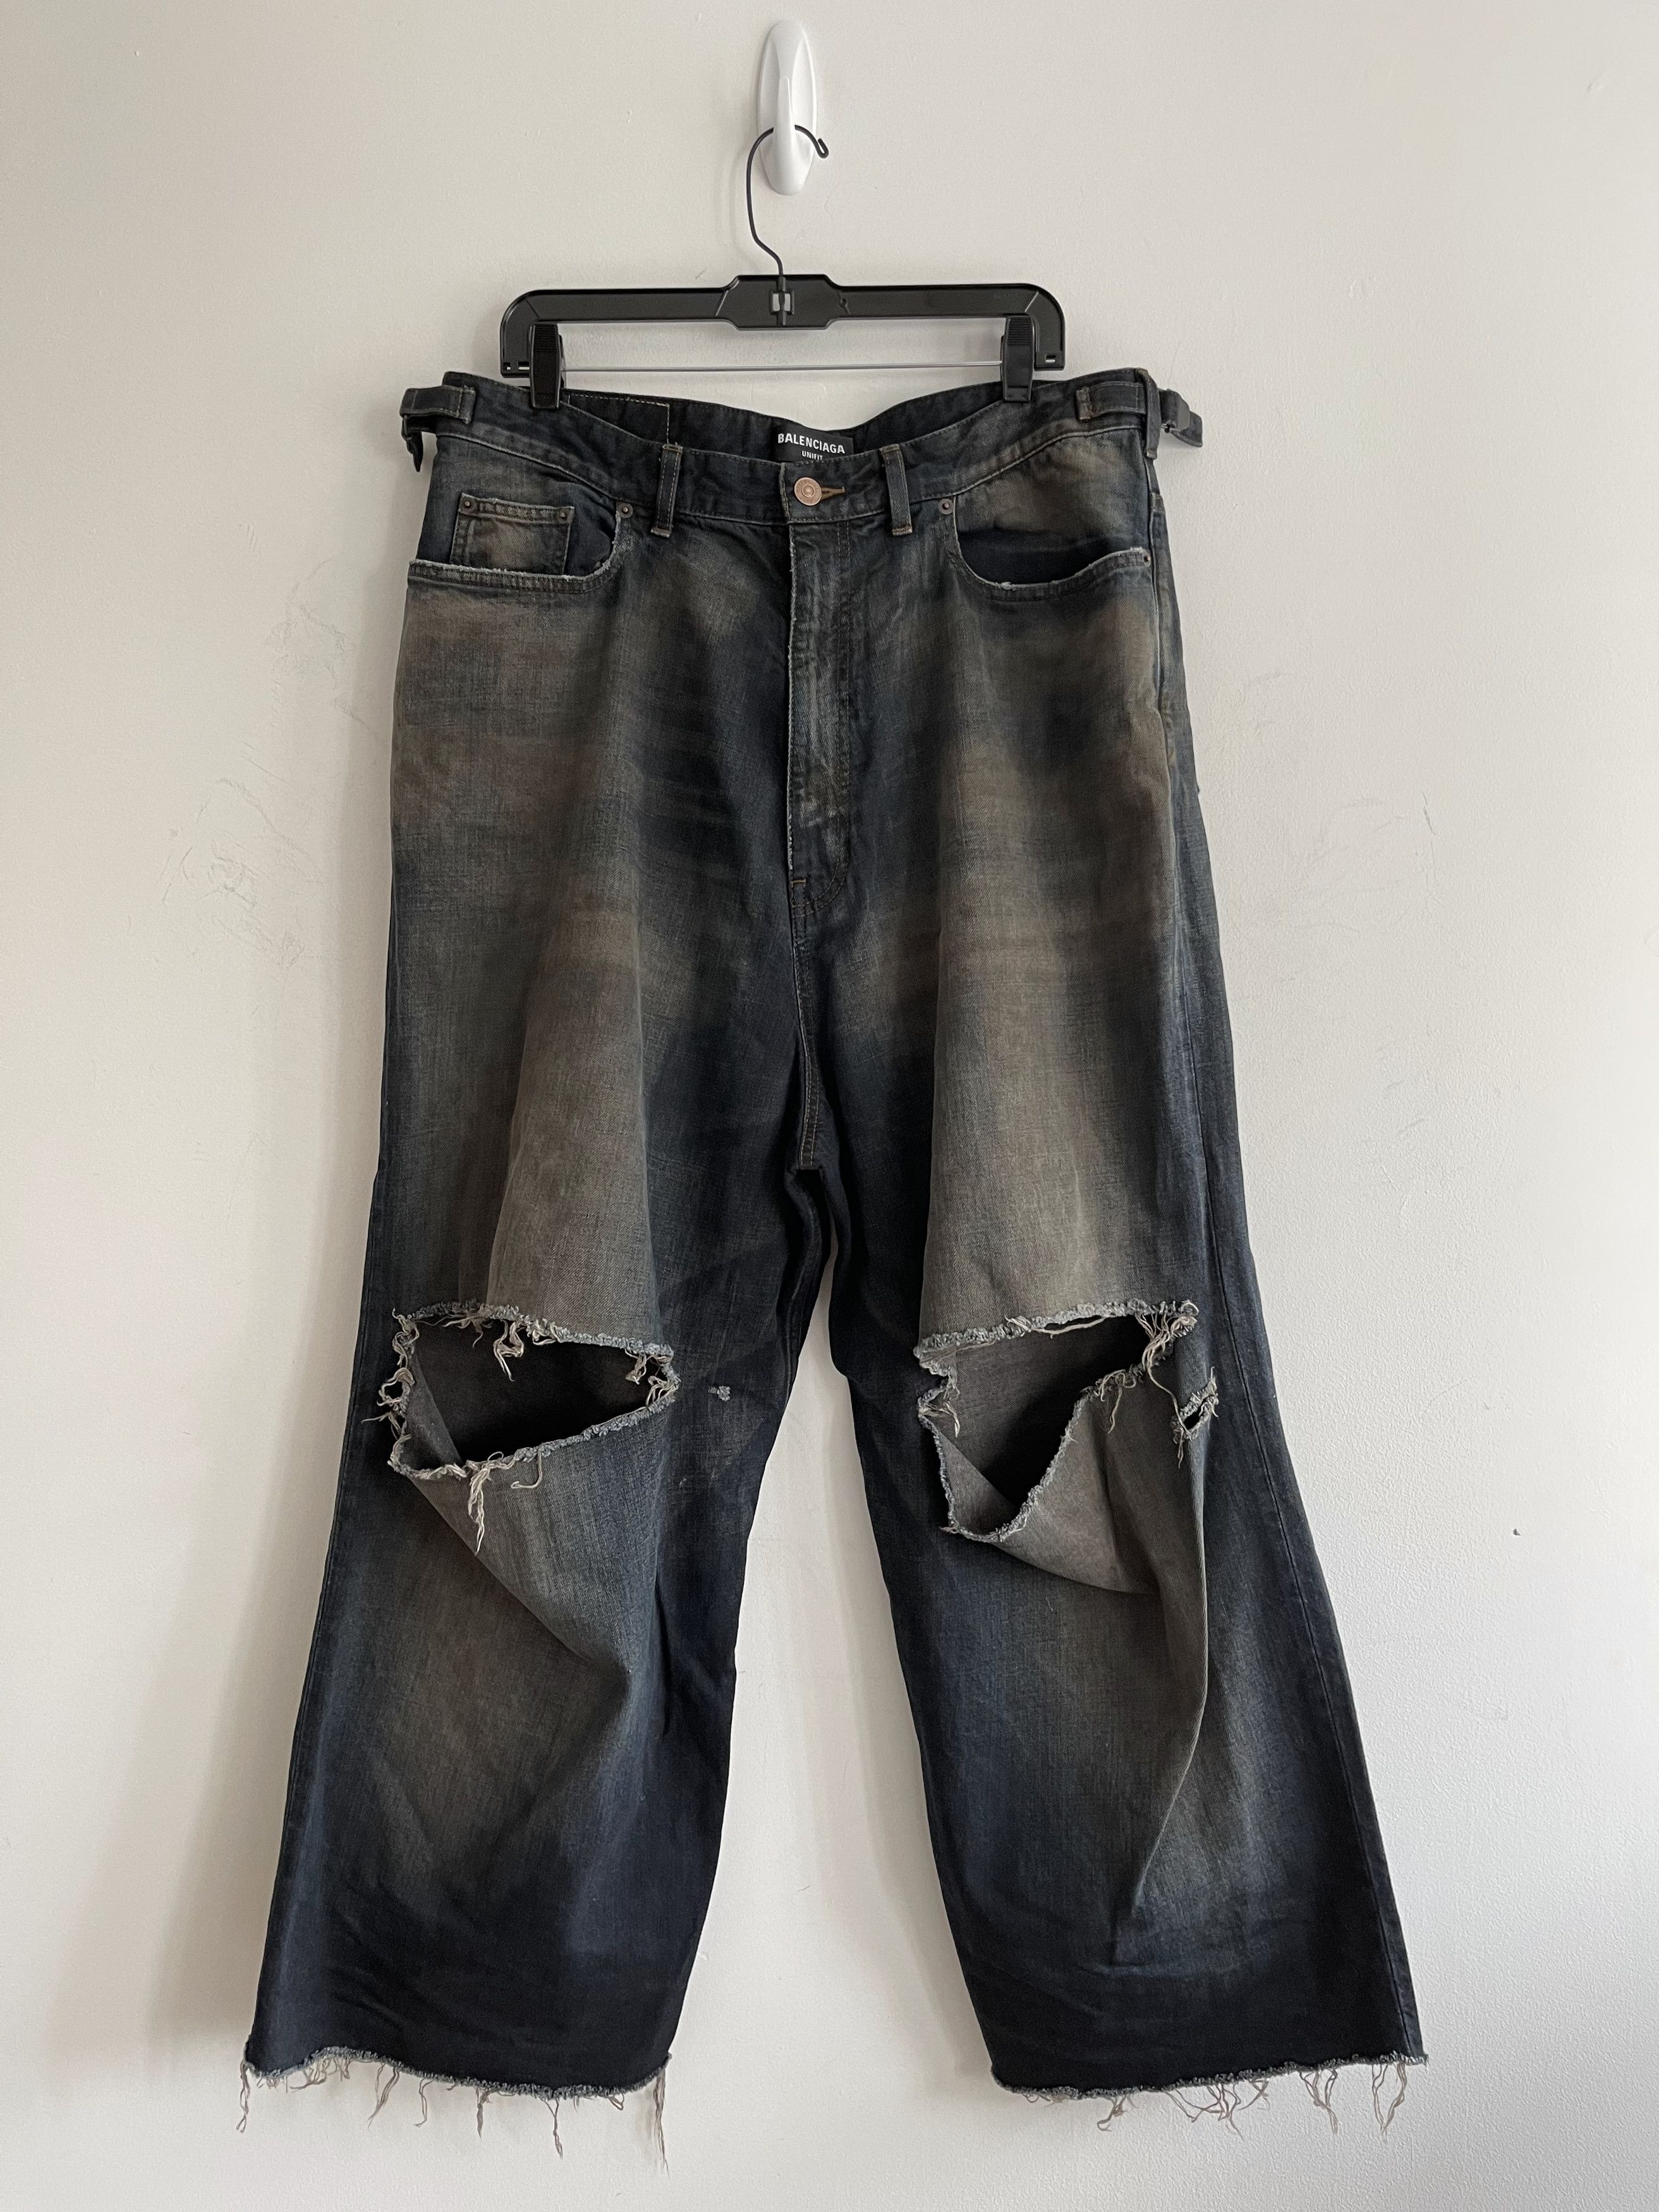 balenciaga destroyed skater jeans - パンツ